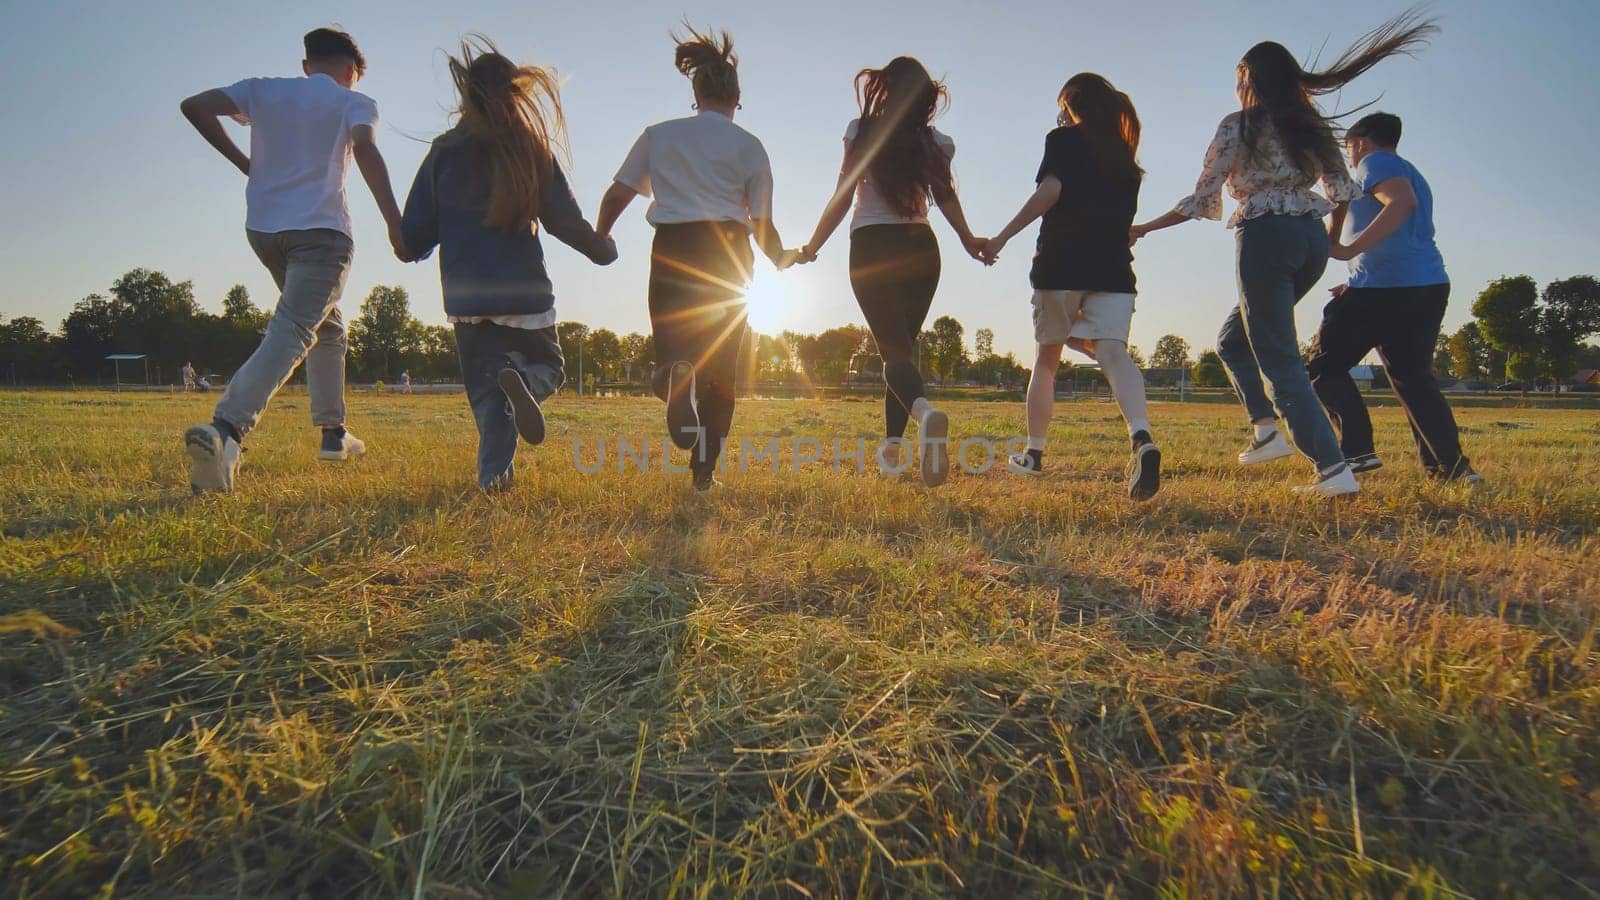 School friends running across the field holding hands at sunset